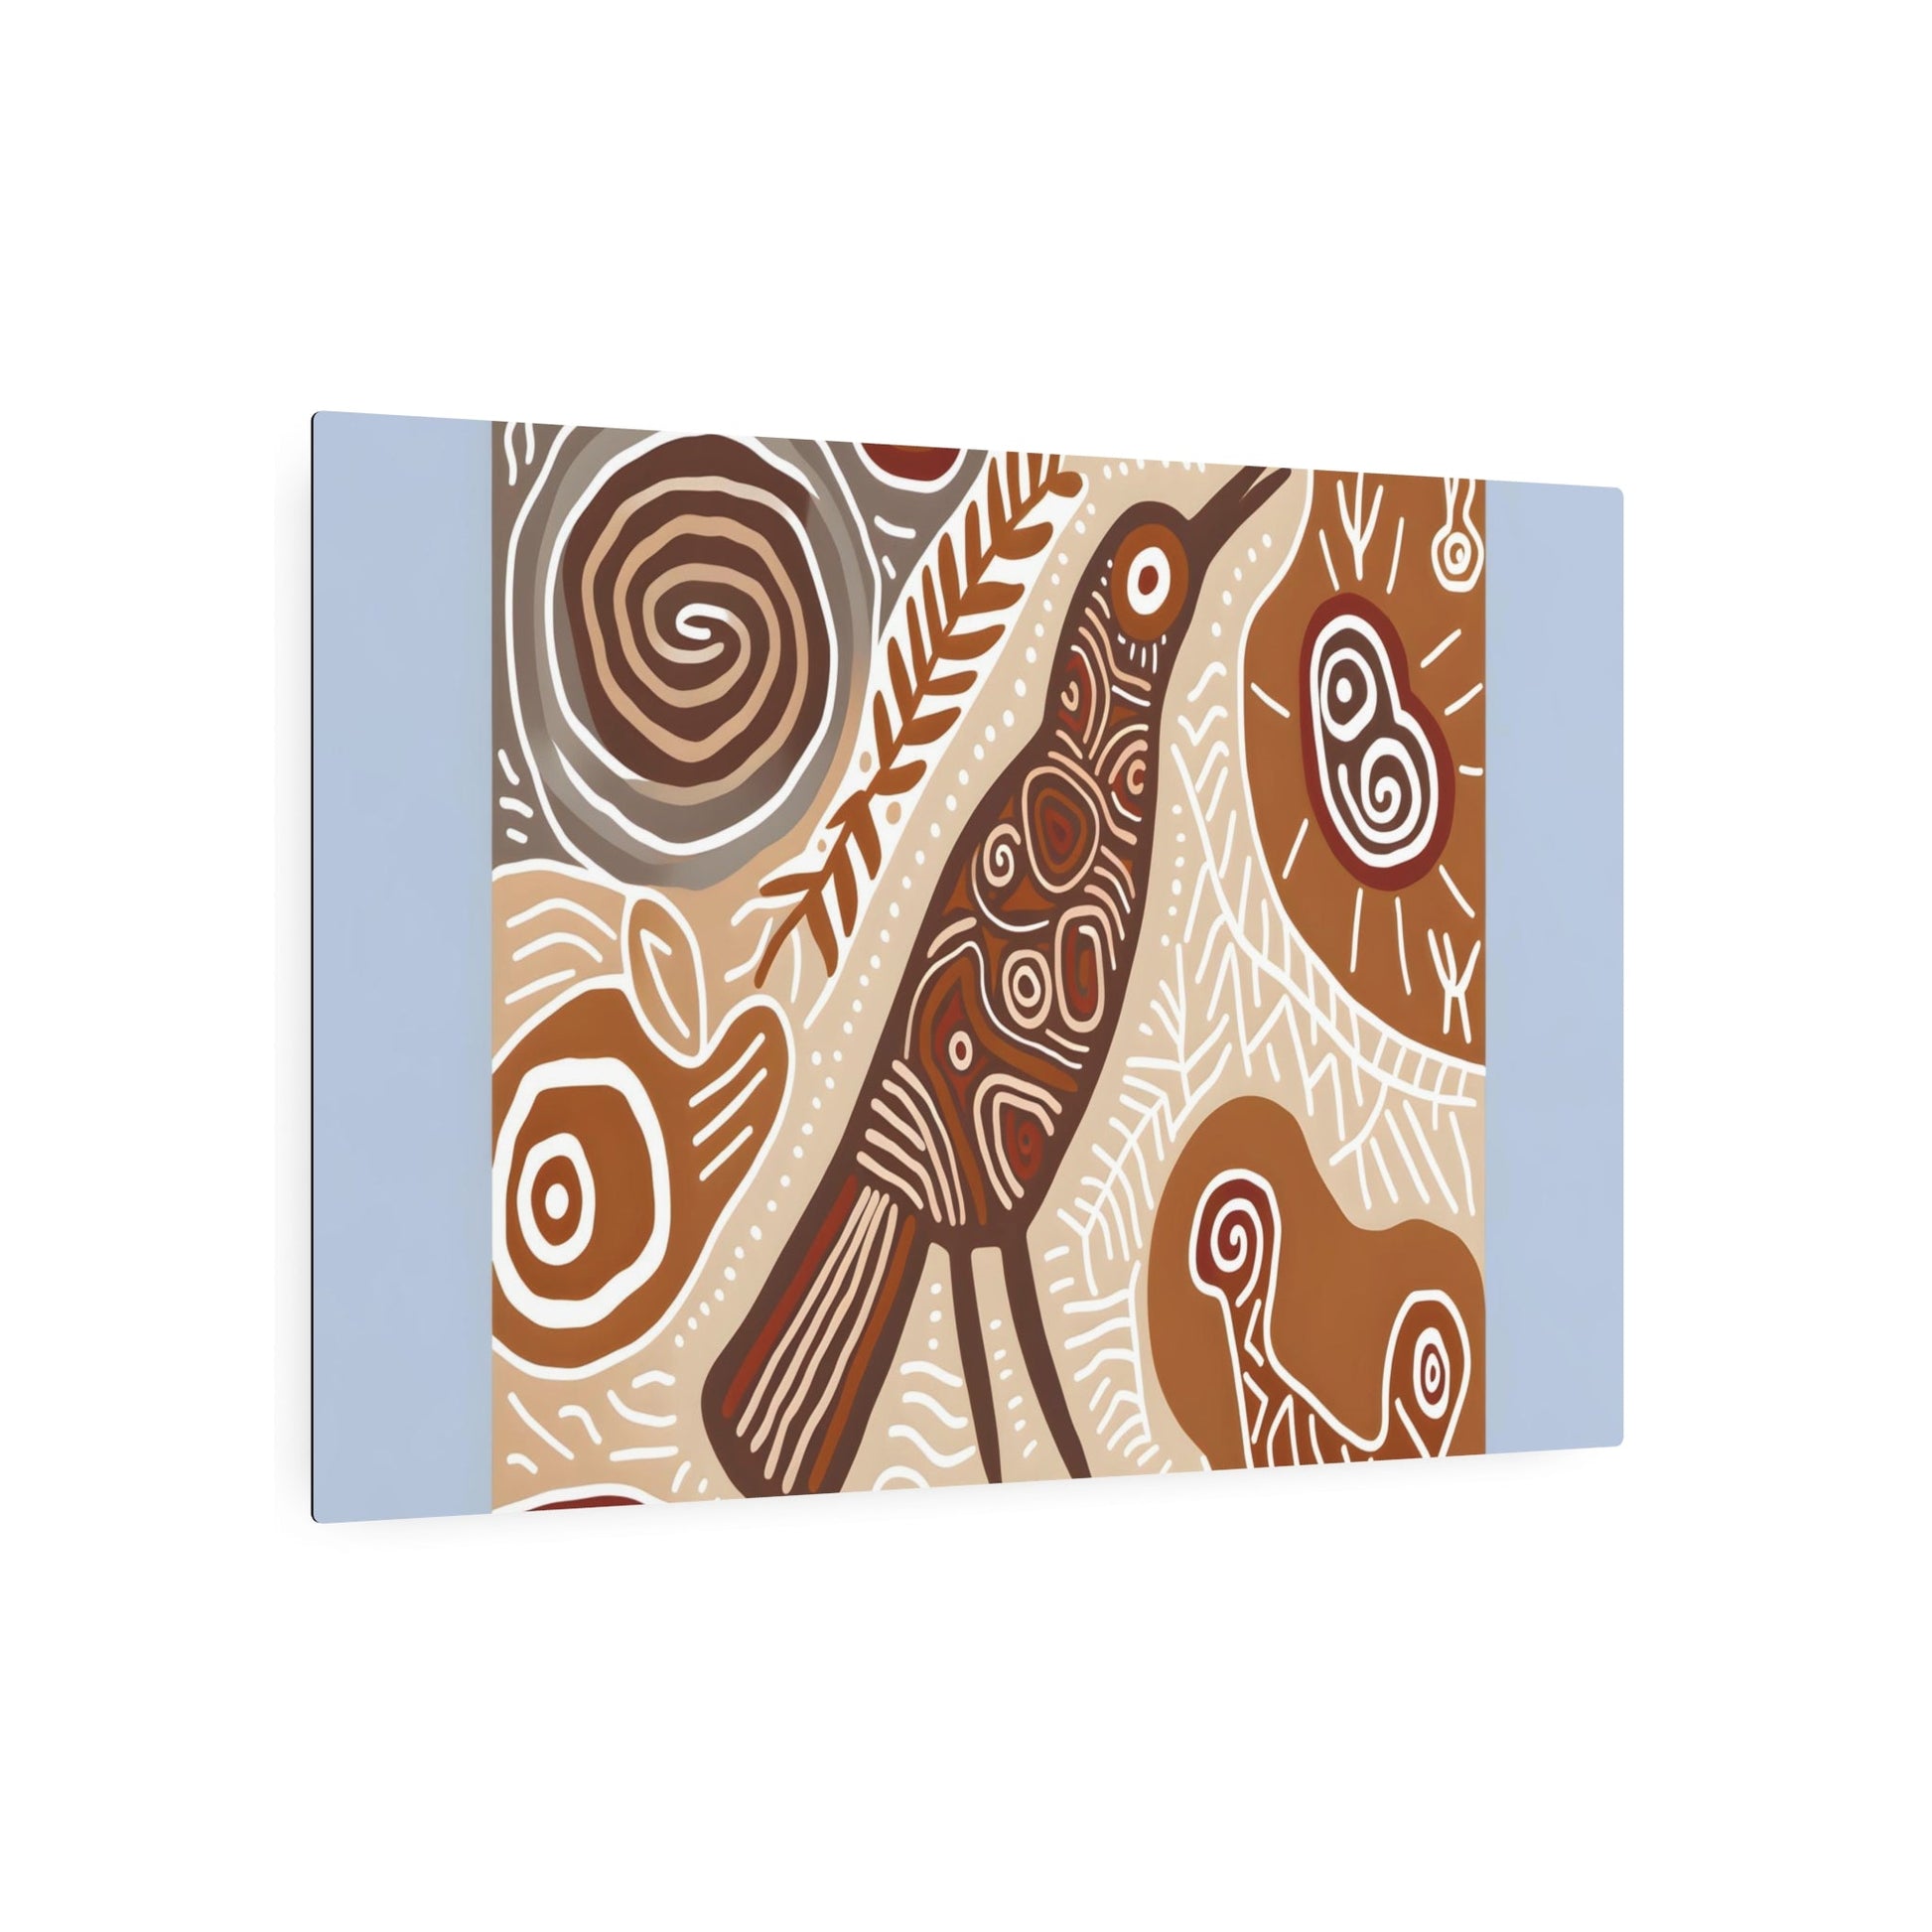 Metal Poster Art | "Aboriginal Art Inspired Australian Bird - Authentic Non-Western Global Art in Unique Aboriginal Style" - Metal Poster Art 36″ x 24″ (Horizontal) 0.12''